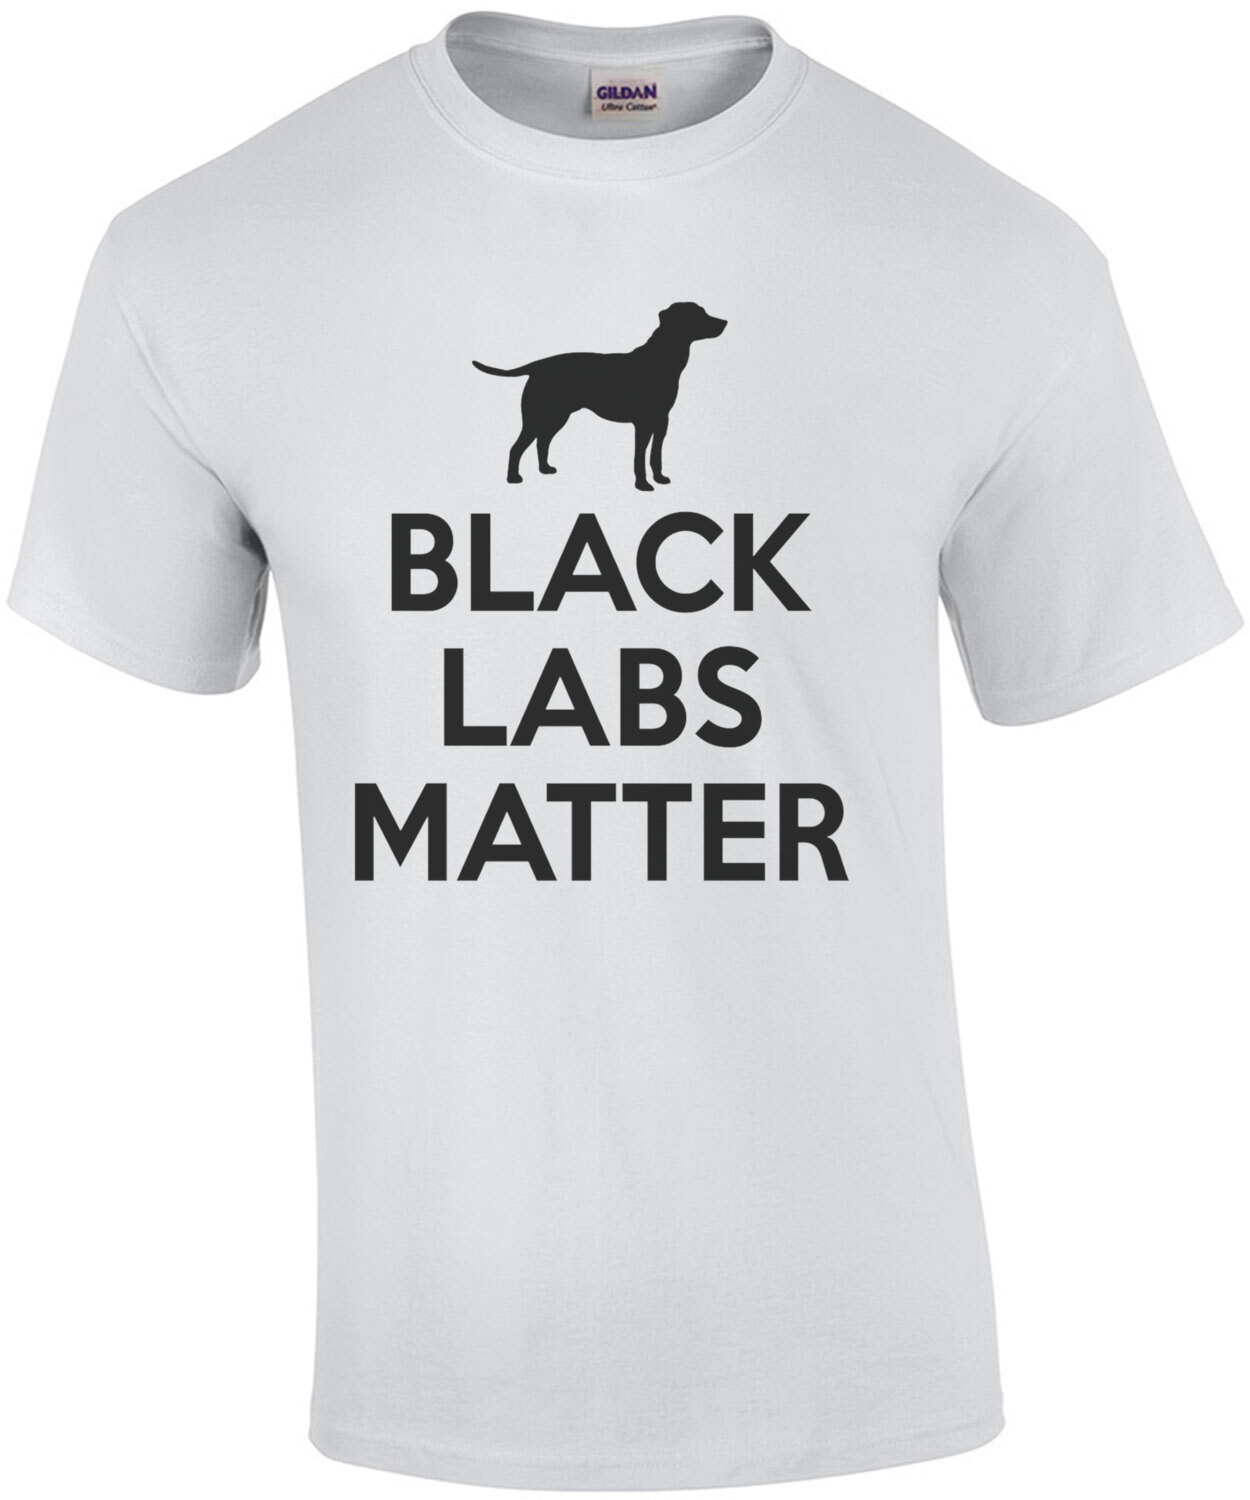 Black Labs Matter - Funny Black Labs Dog T-Shirt